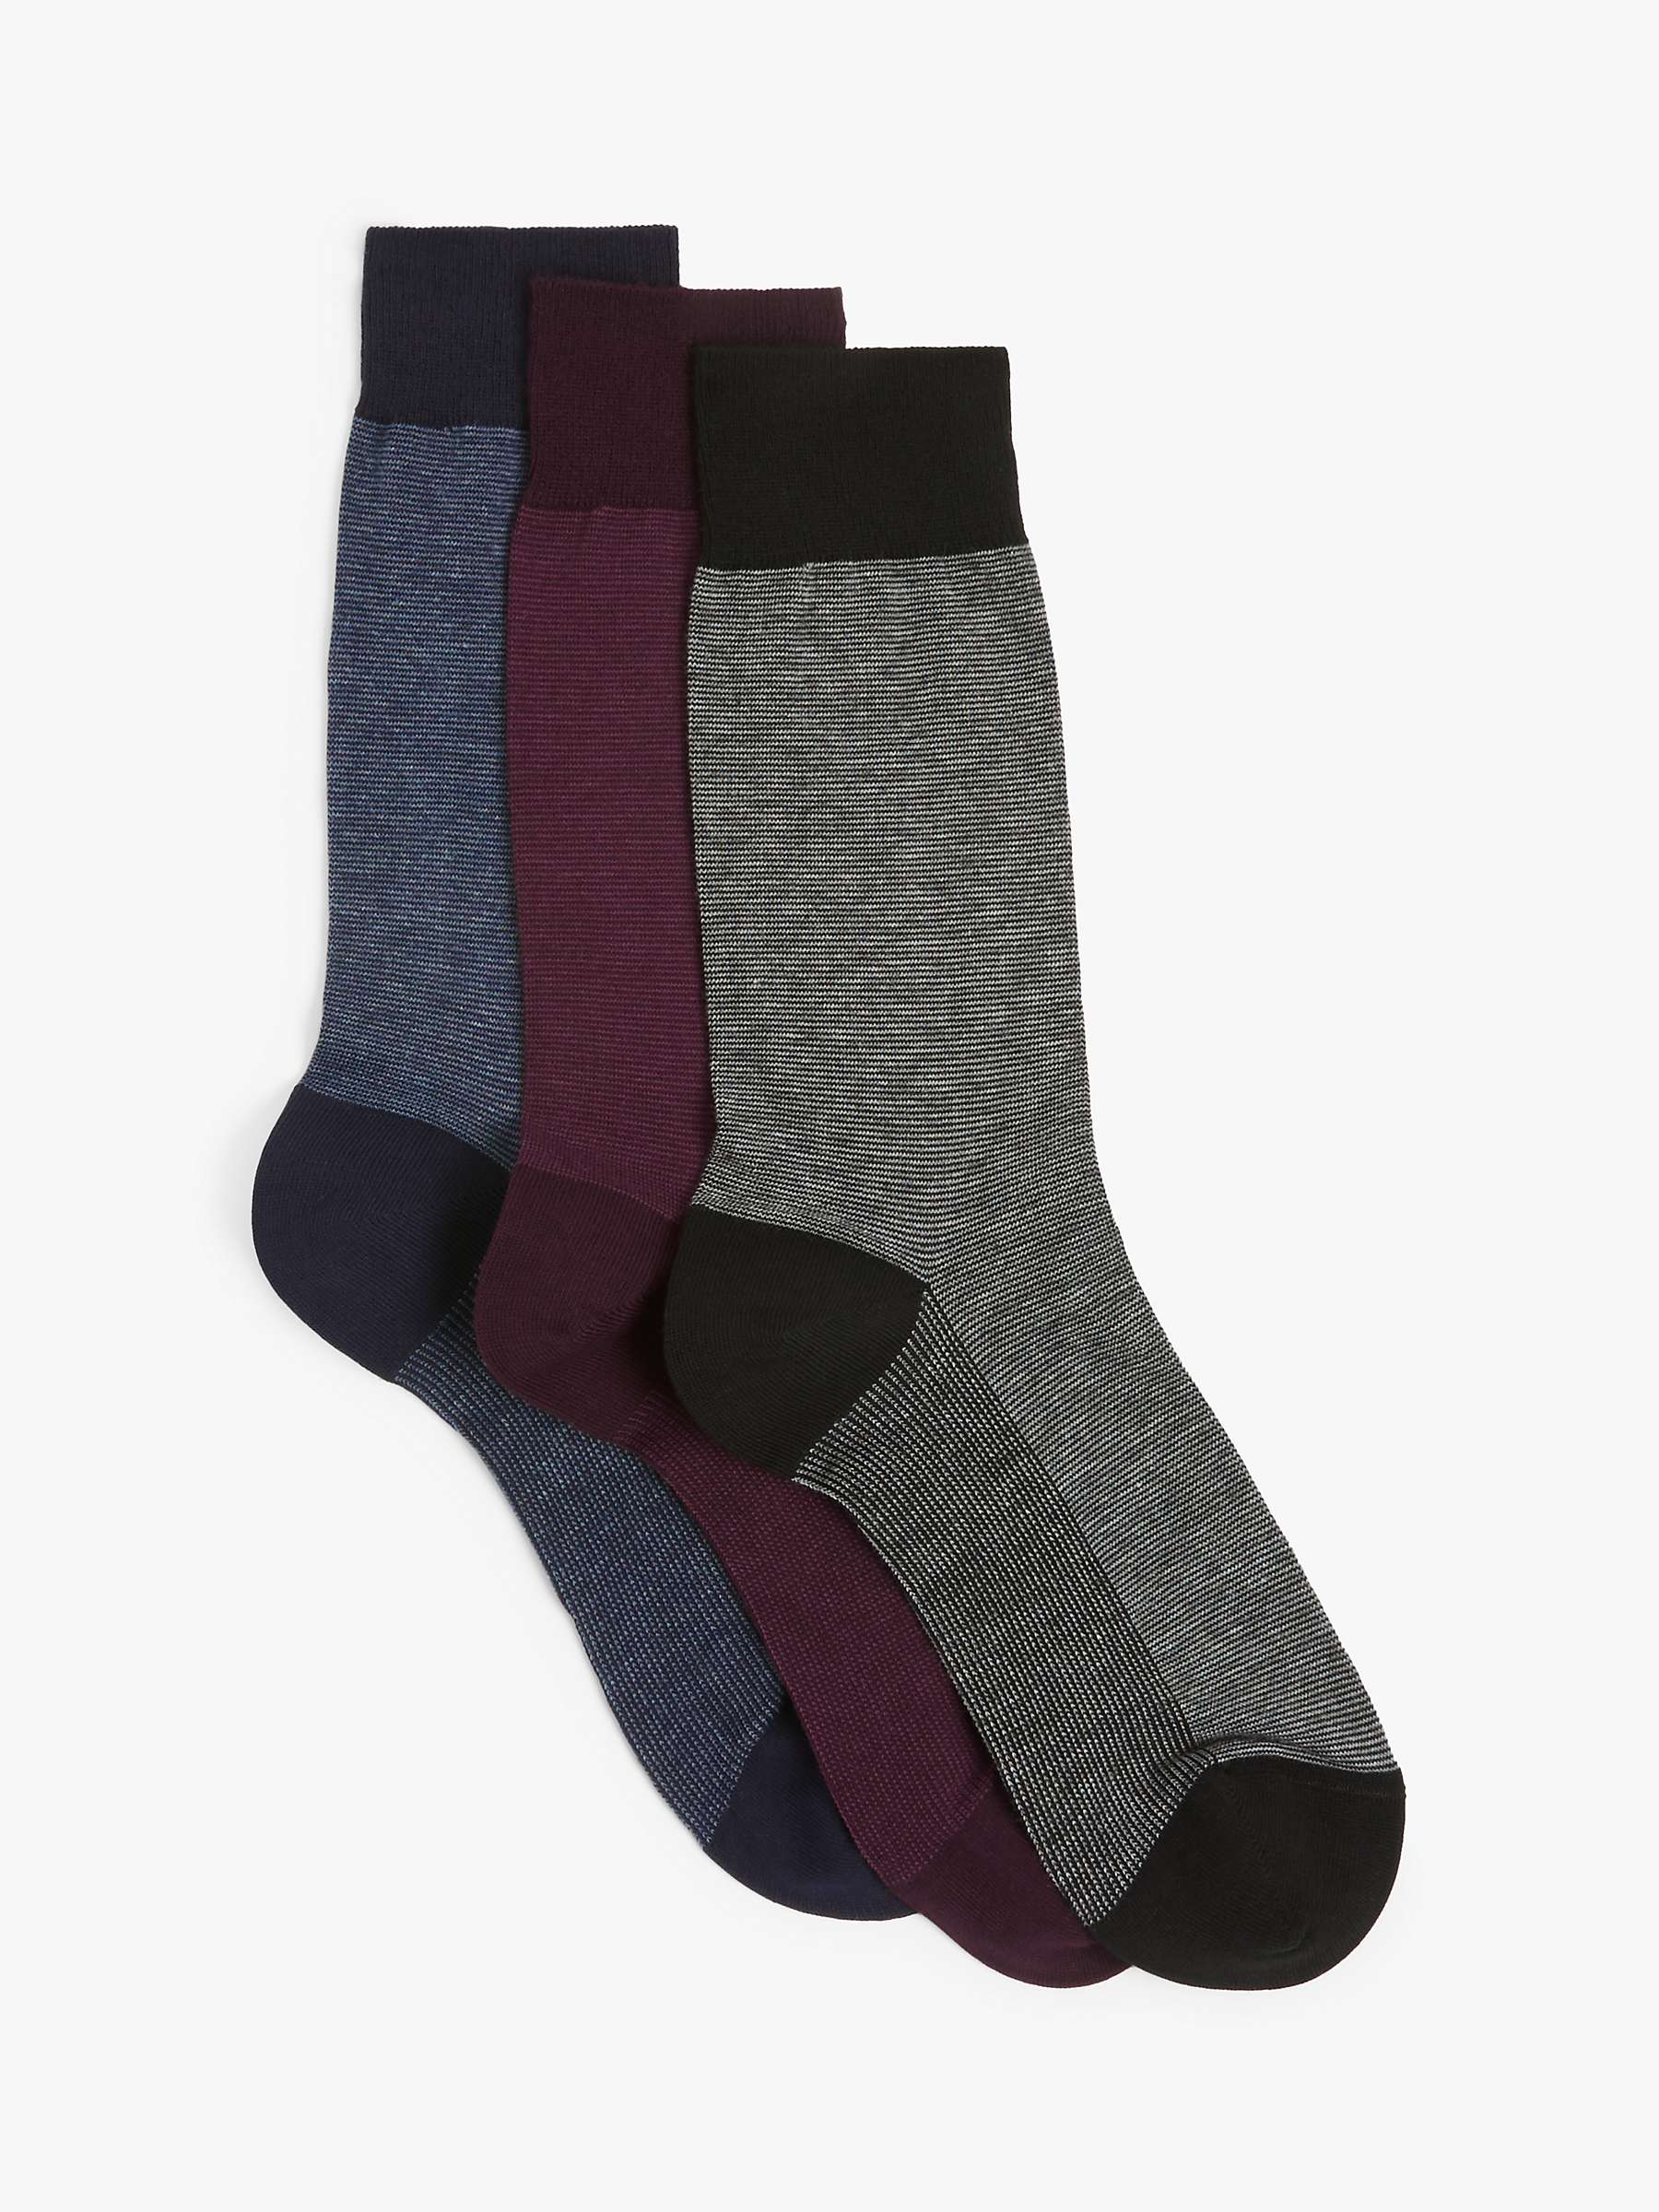 Buy John Lewis Made in Italy Cotton Stripe Men's Socks, Pack of 3 Online at johnlewis.com